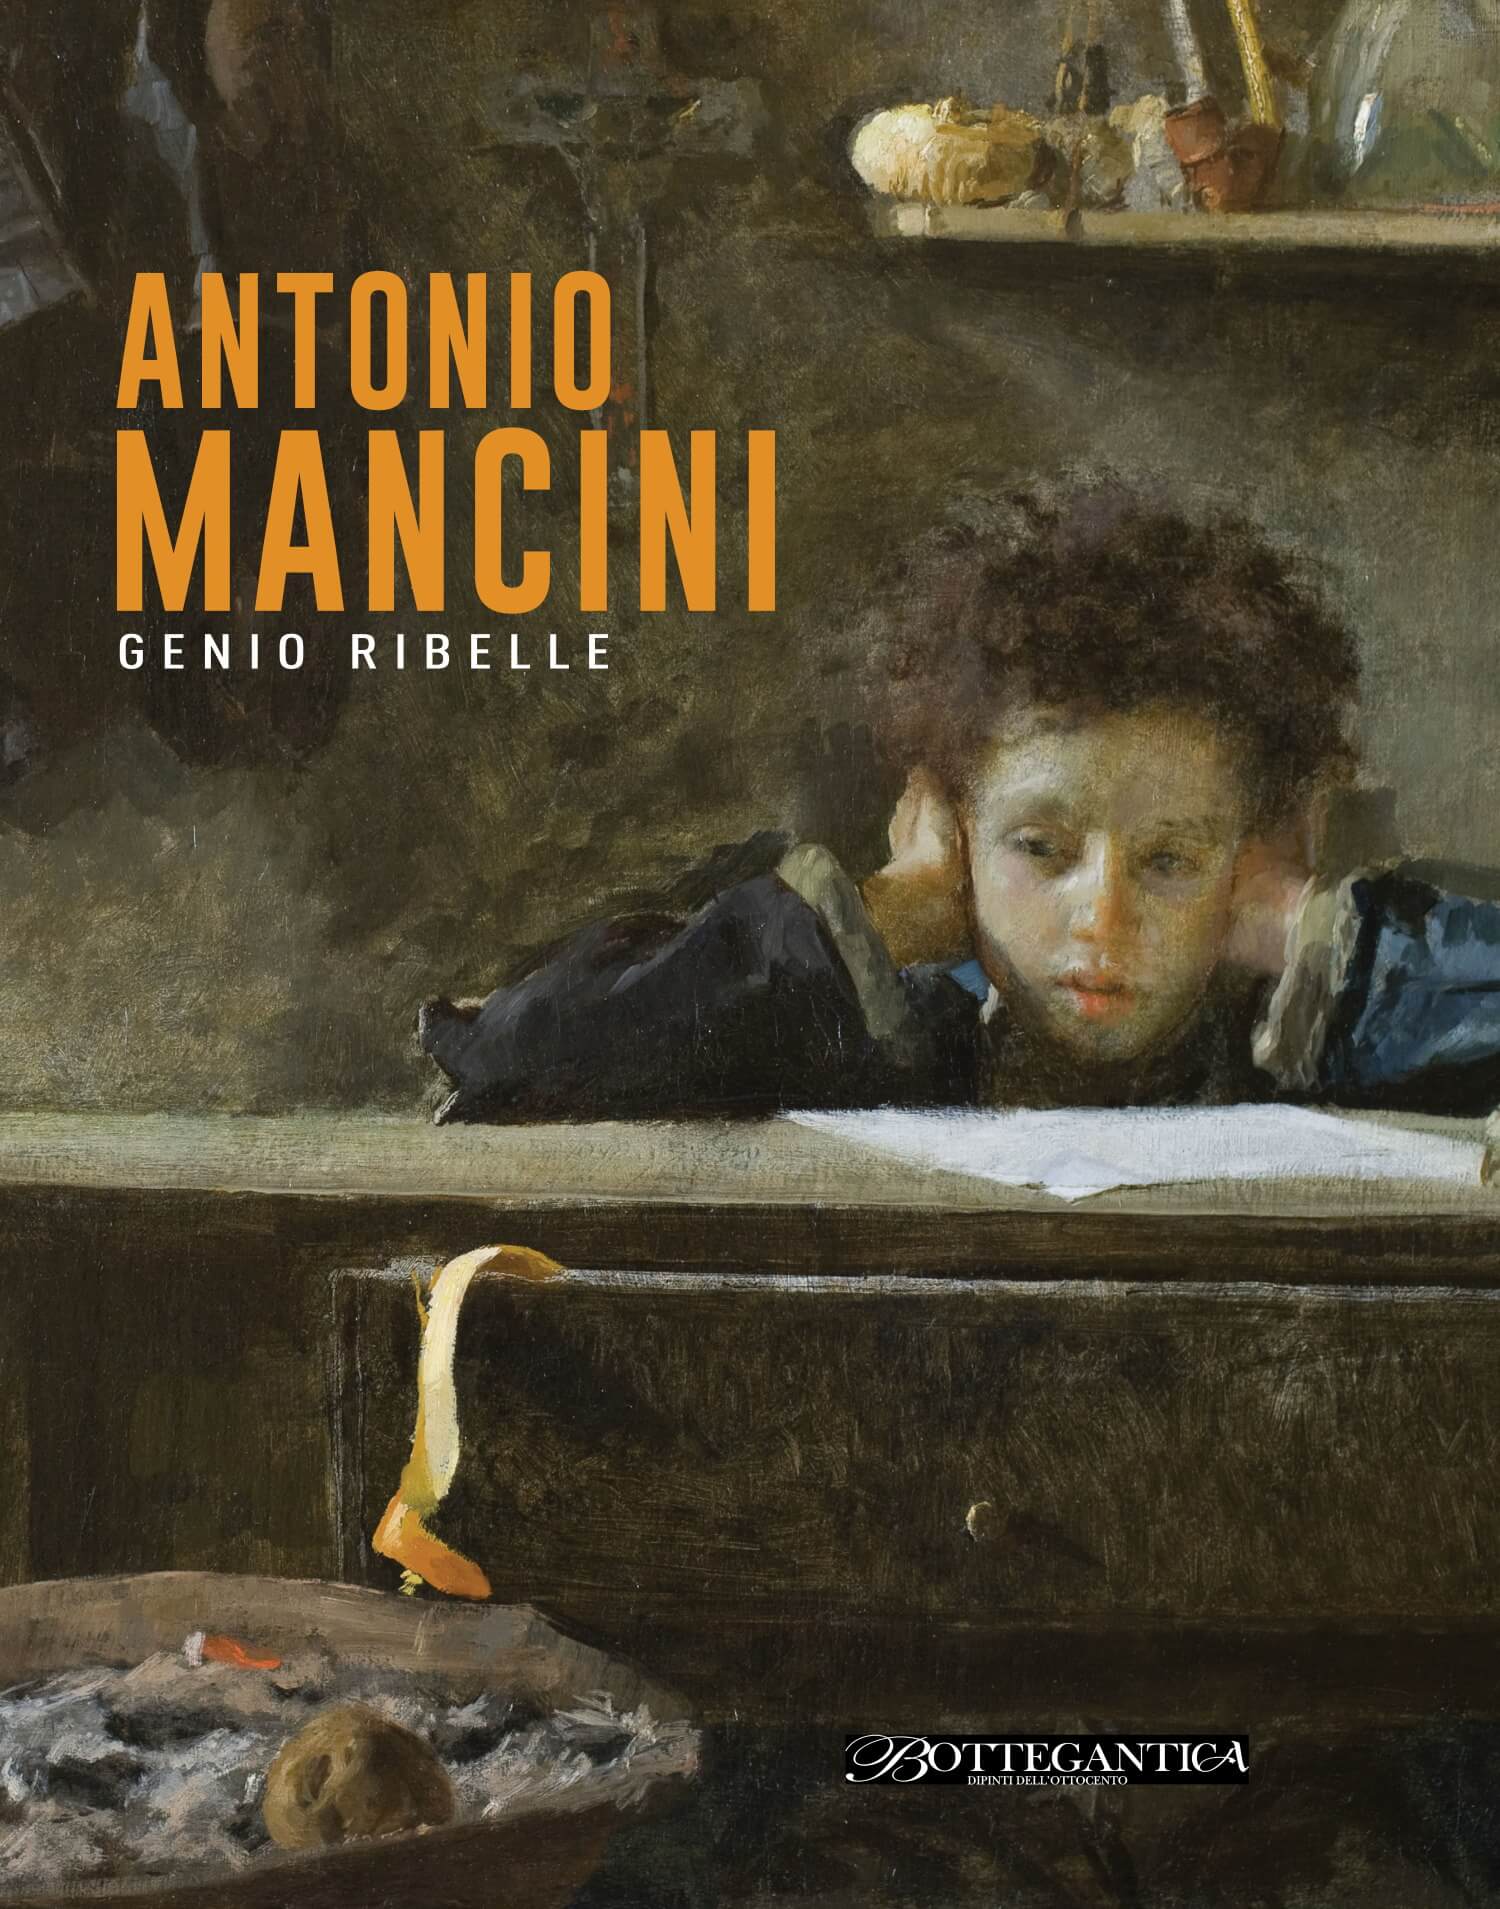 Antonio Mancini, Genio ribelle